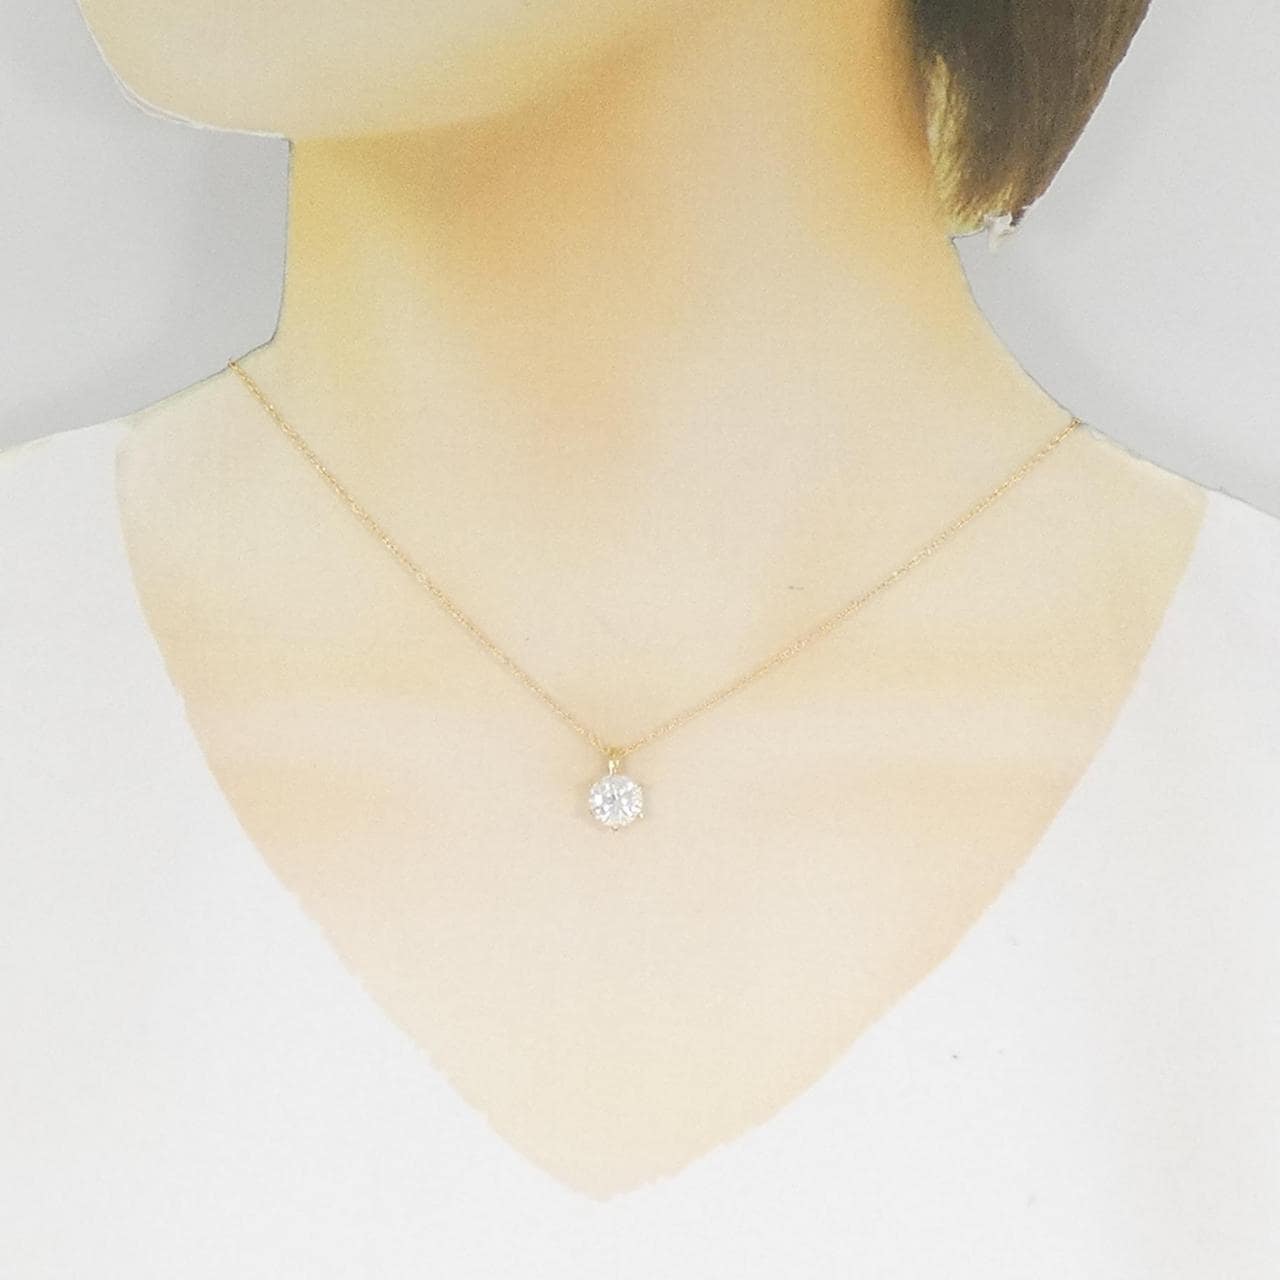 [Remake] K18YG Diamond Necklace 2.01CT H I1 Good